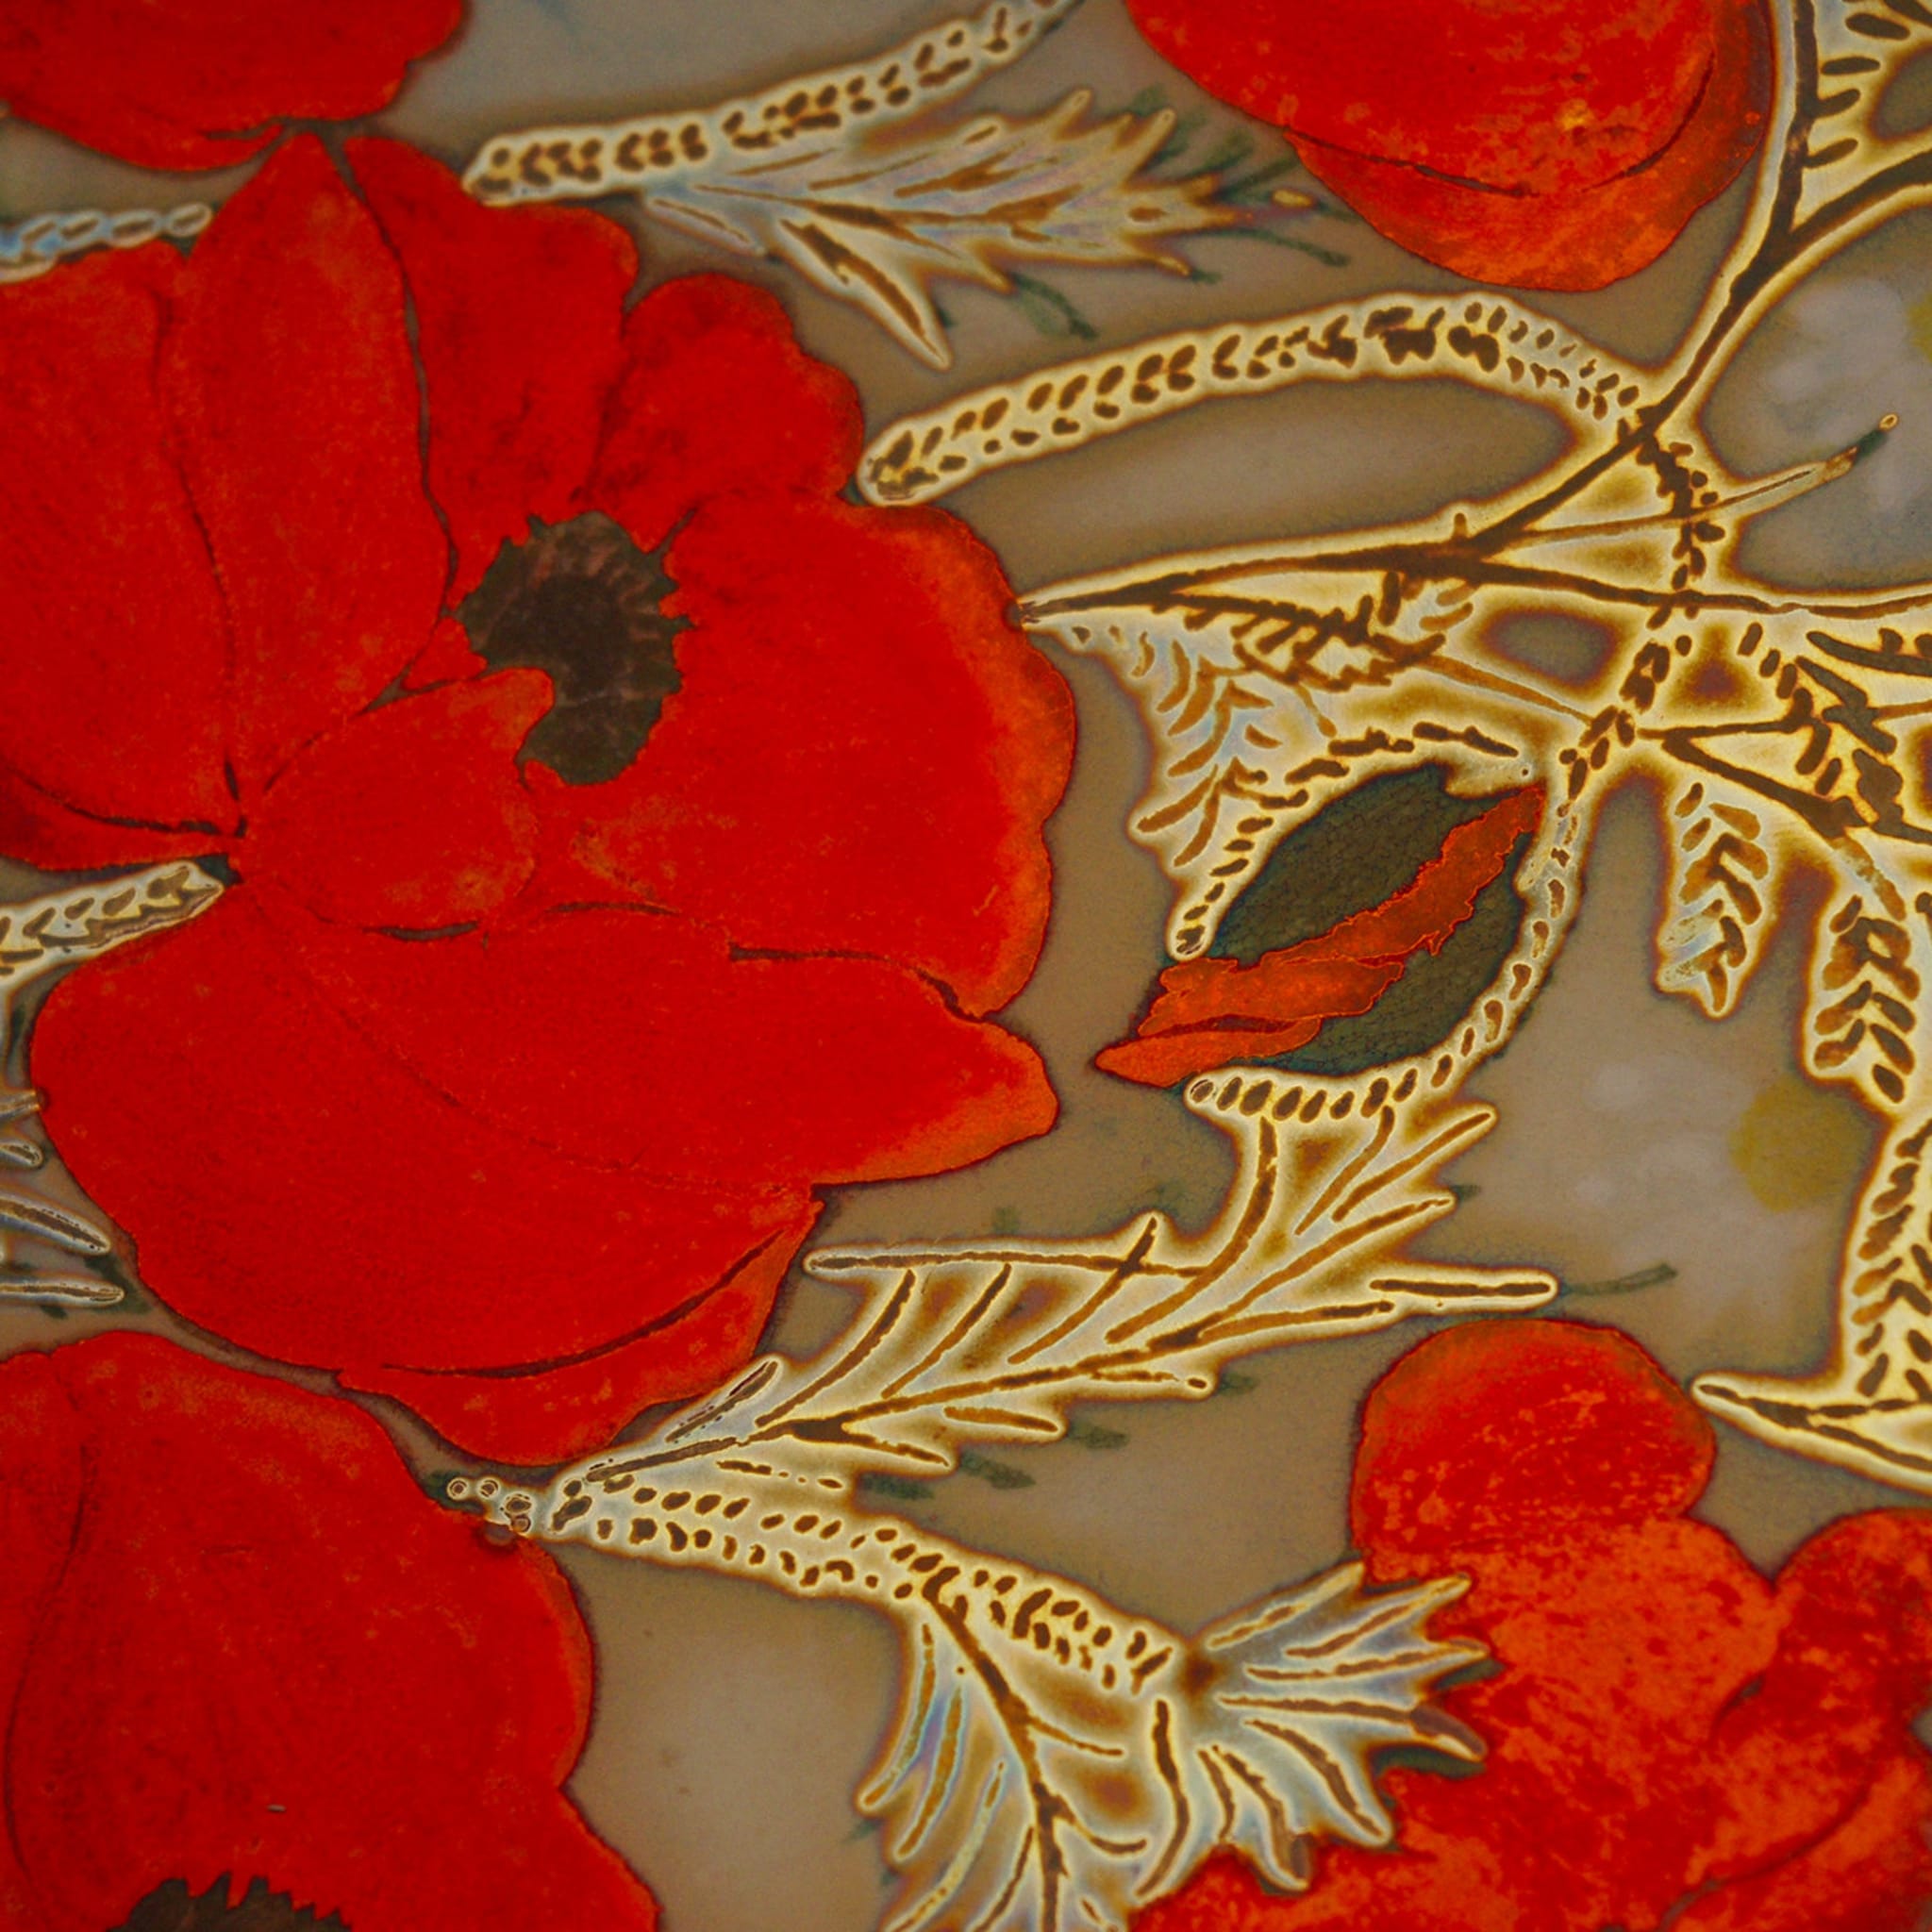 Decorative Plate with Poppy Flowers - Alternative view 2